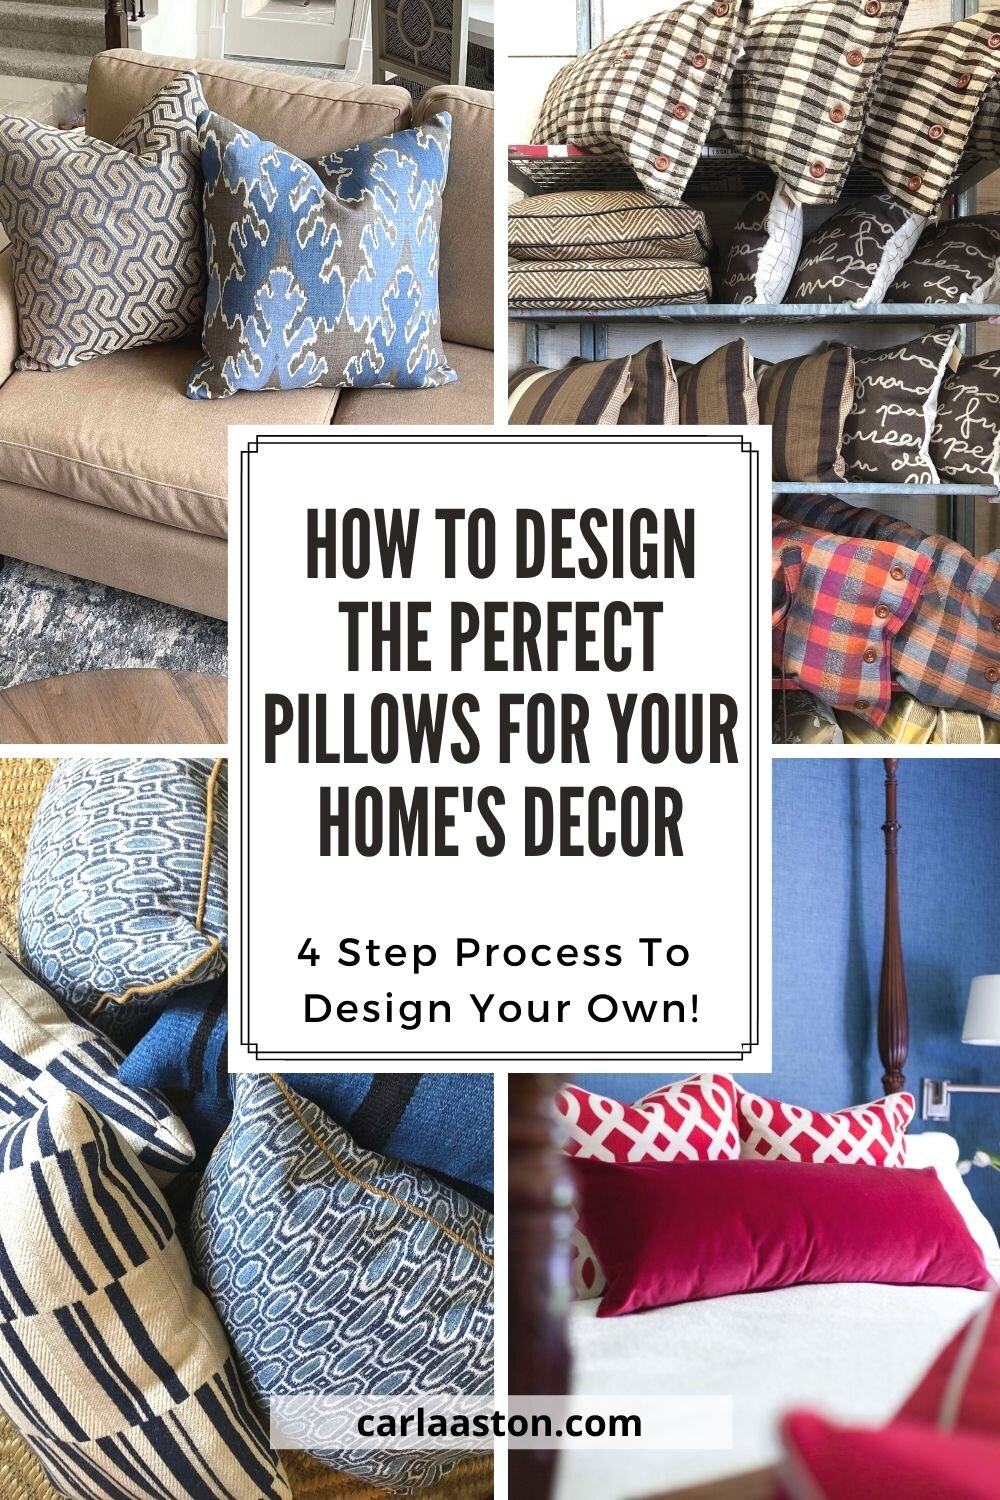 https://images.squarespace-cdn.com/content/v1/4fcf5c8684aef9ce6e0a44b0/1626879309970-5C0VHUPFOYO8RVKK0WBH/How+To+Design+The+Perfect+Pillows+For+Your+Home%27s+Decor